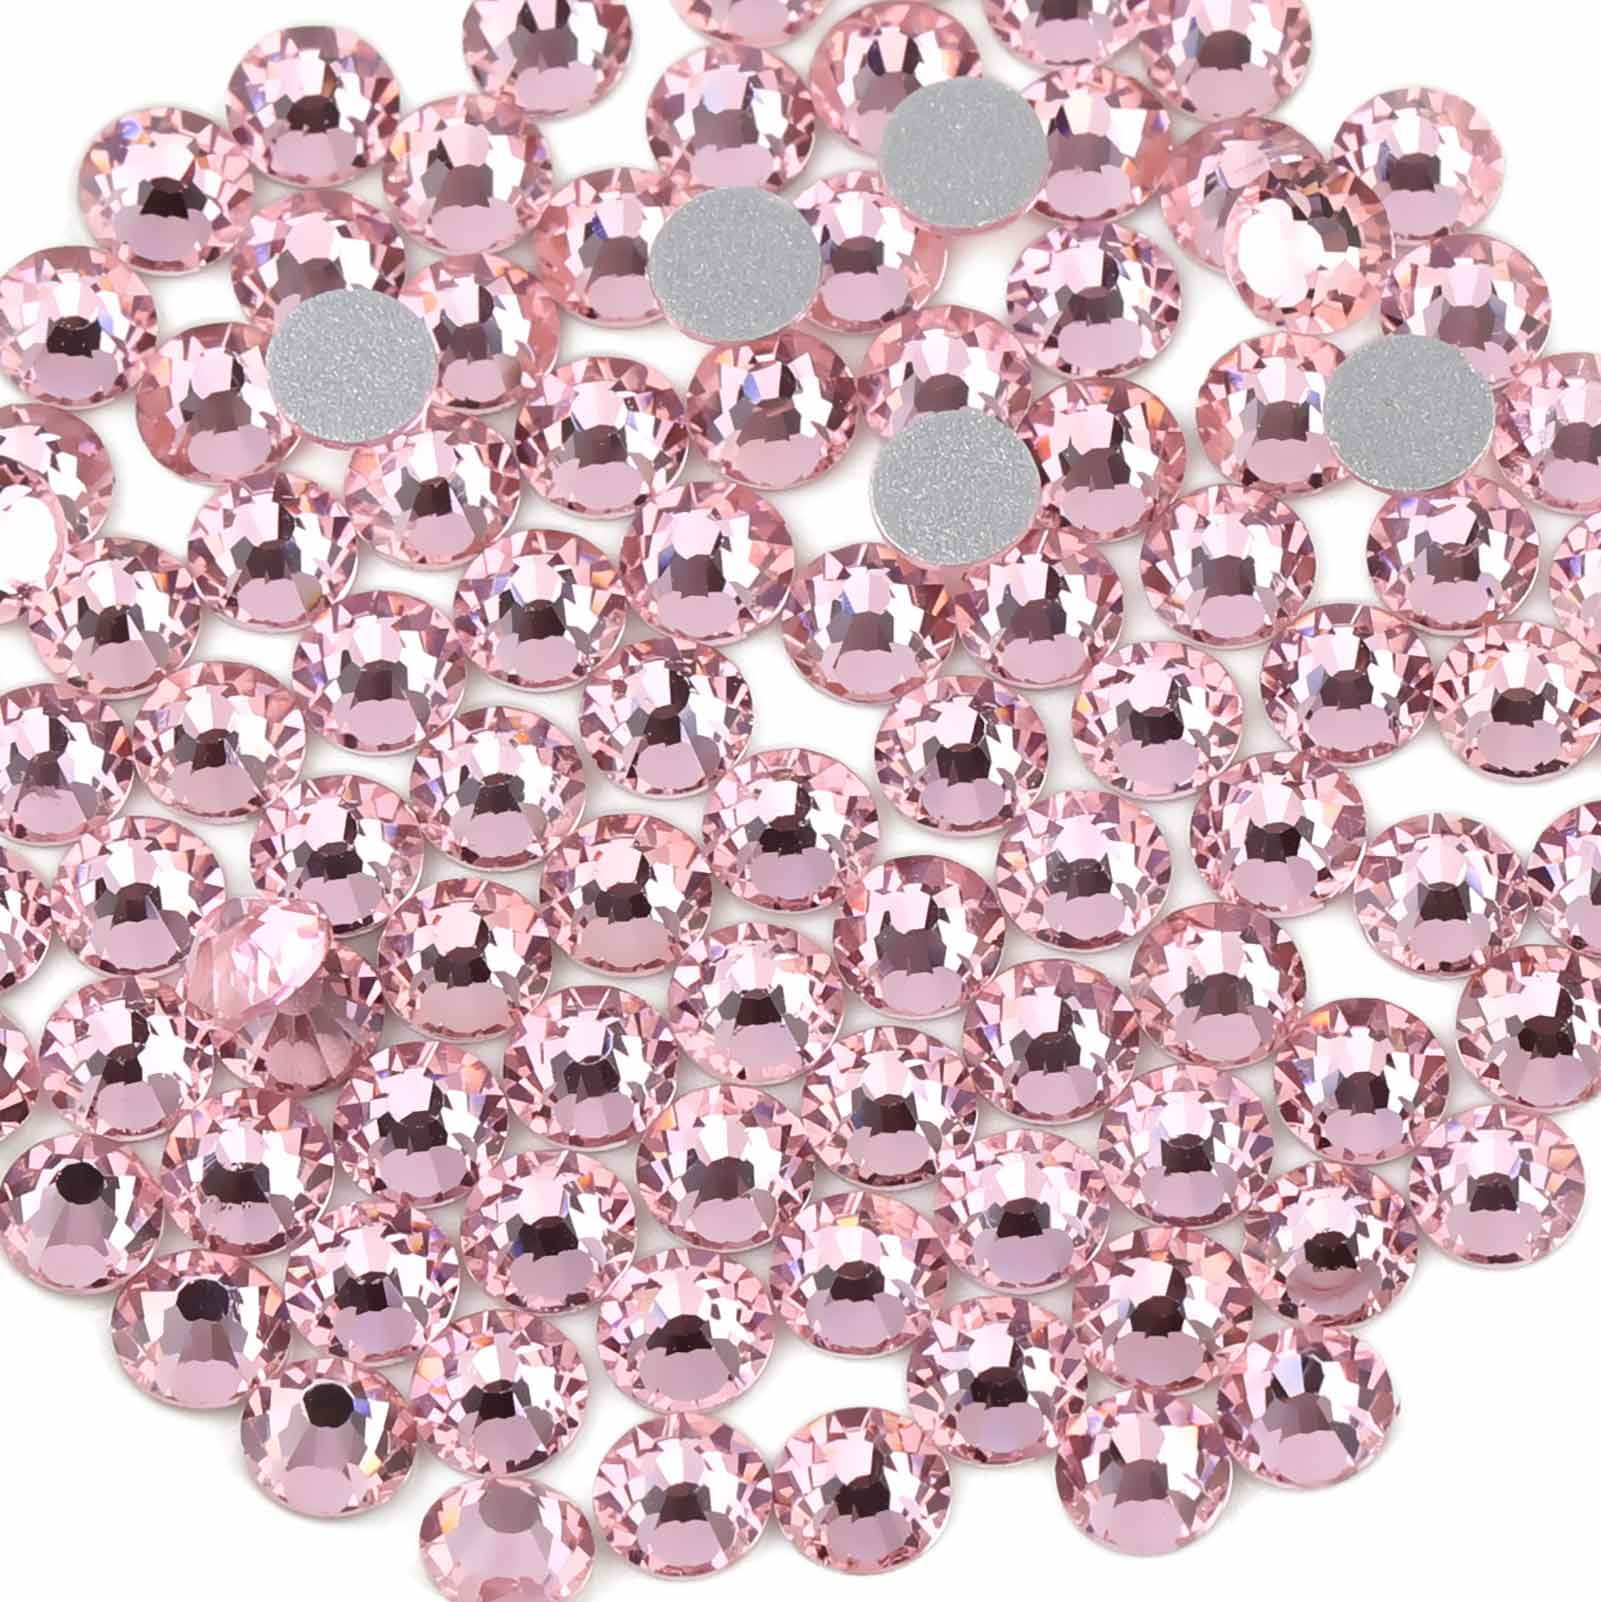  Beadsland Hotfix Rhinestones, 2880pcs Flatback Crystal  Rhinestones for Crafts Clothes DIY Decorations, Light Pink AB, SS10,  2.7-2.9mm